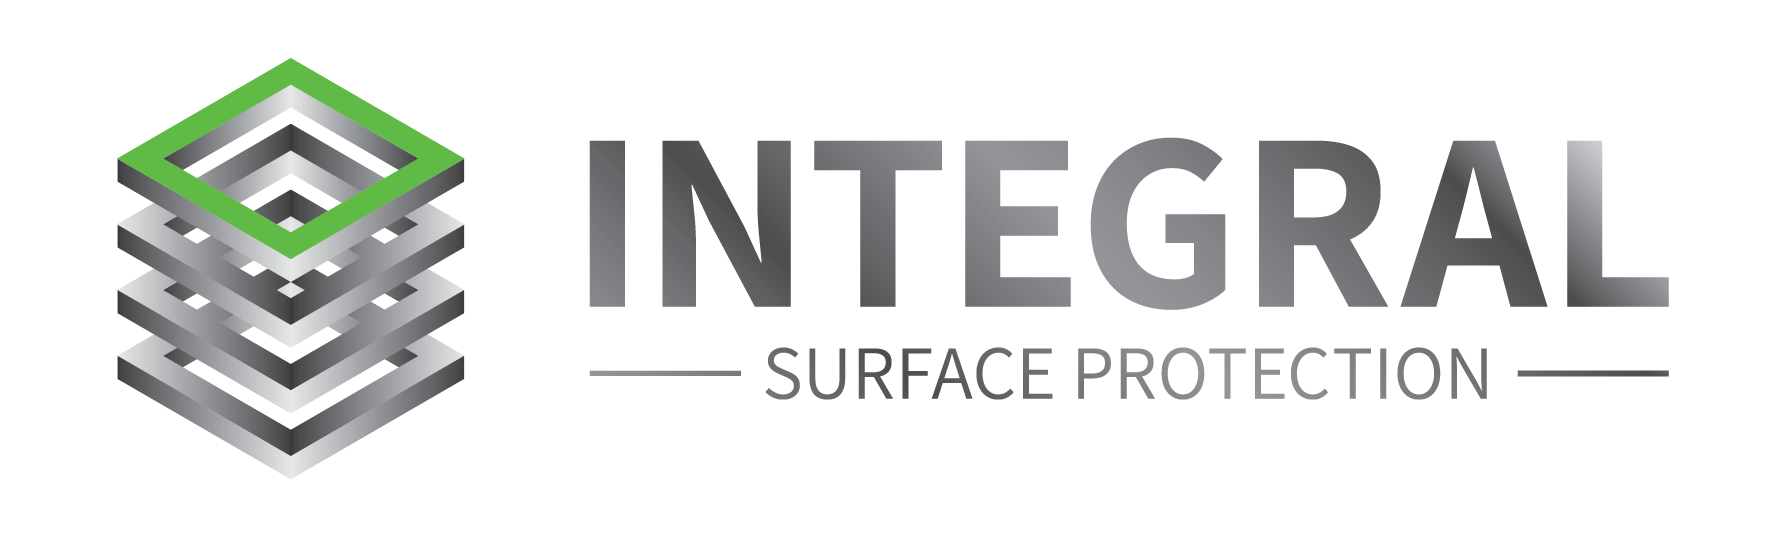 integral surface protection logo